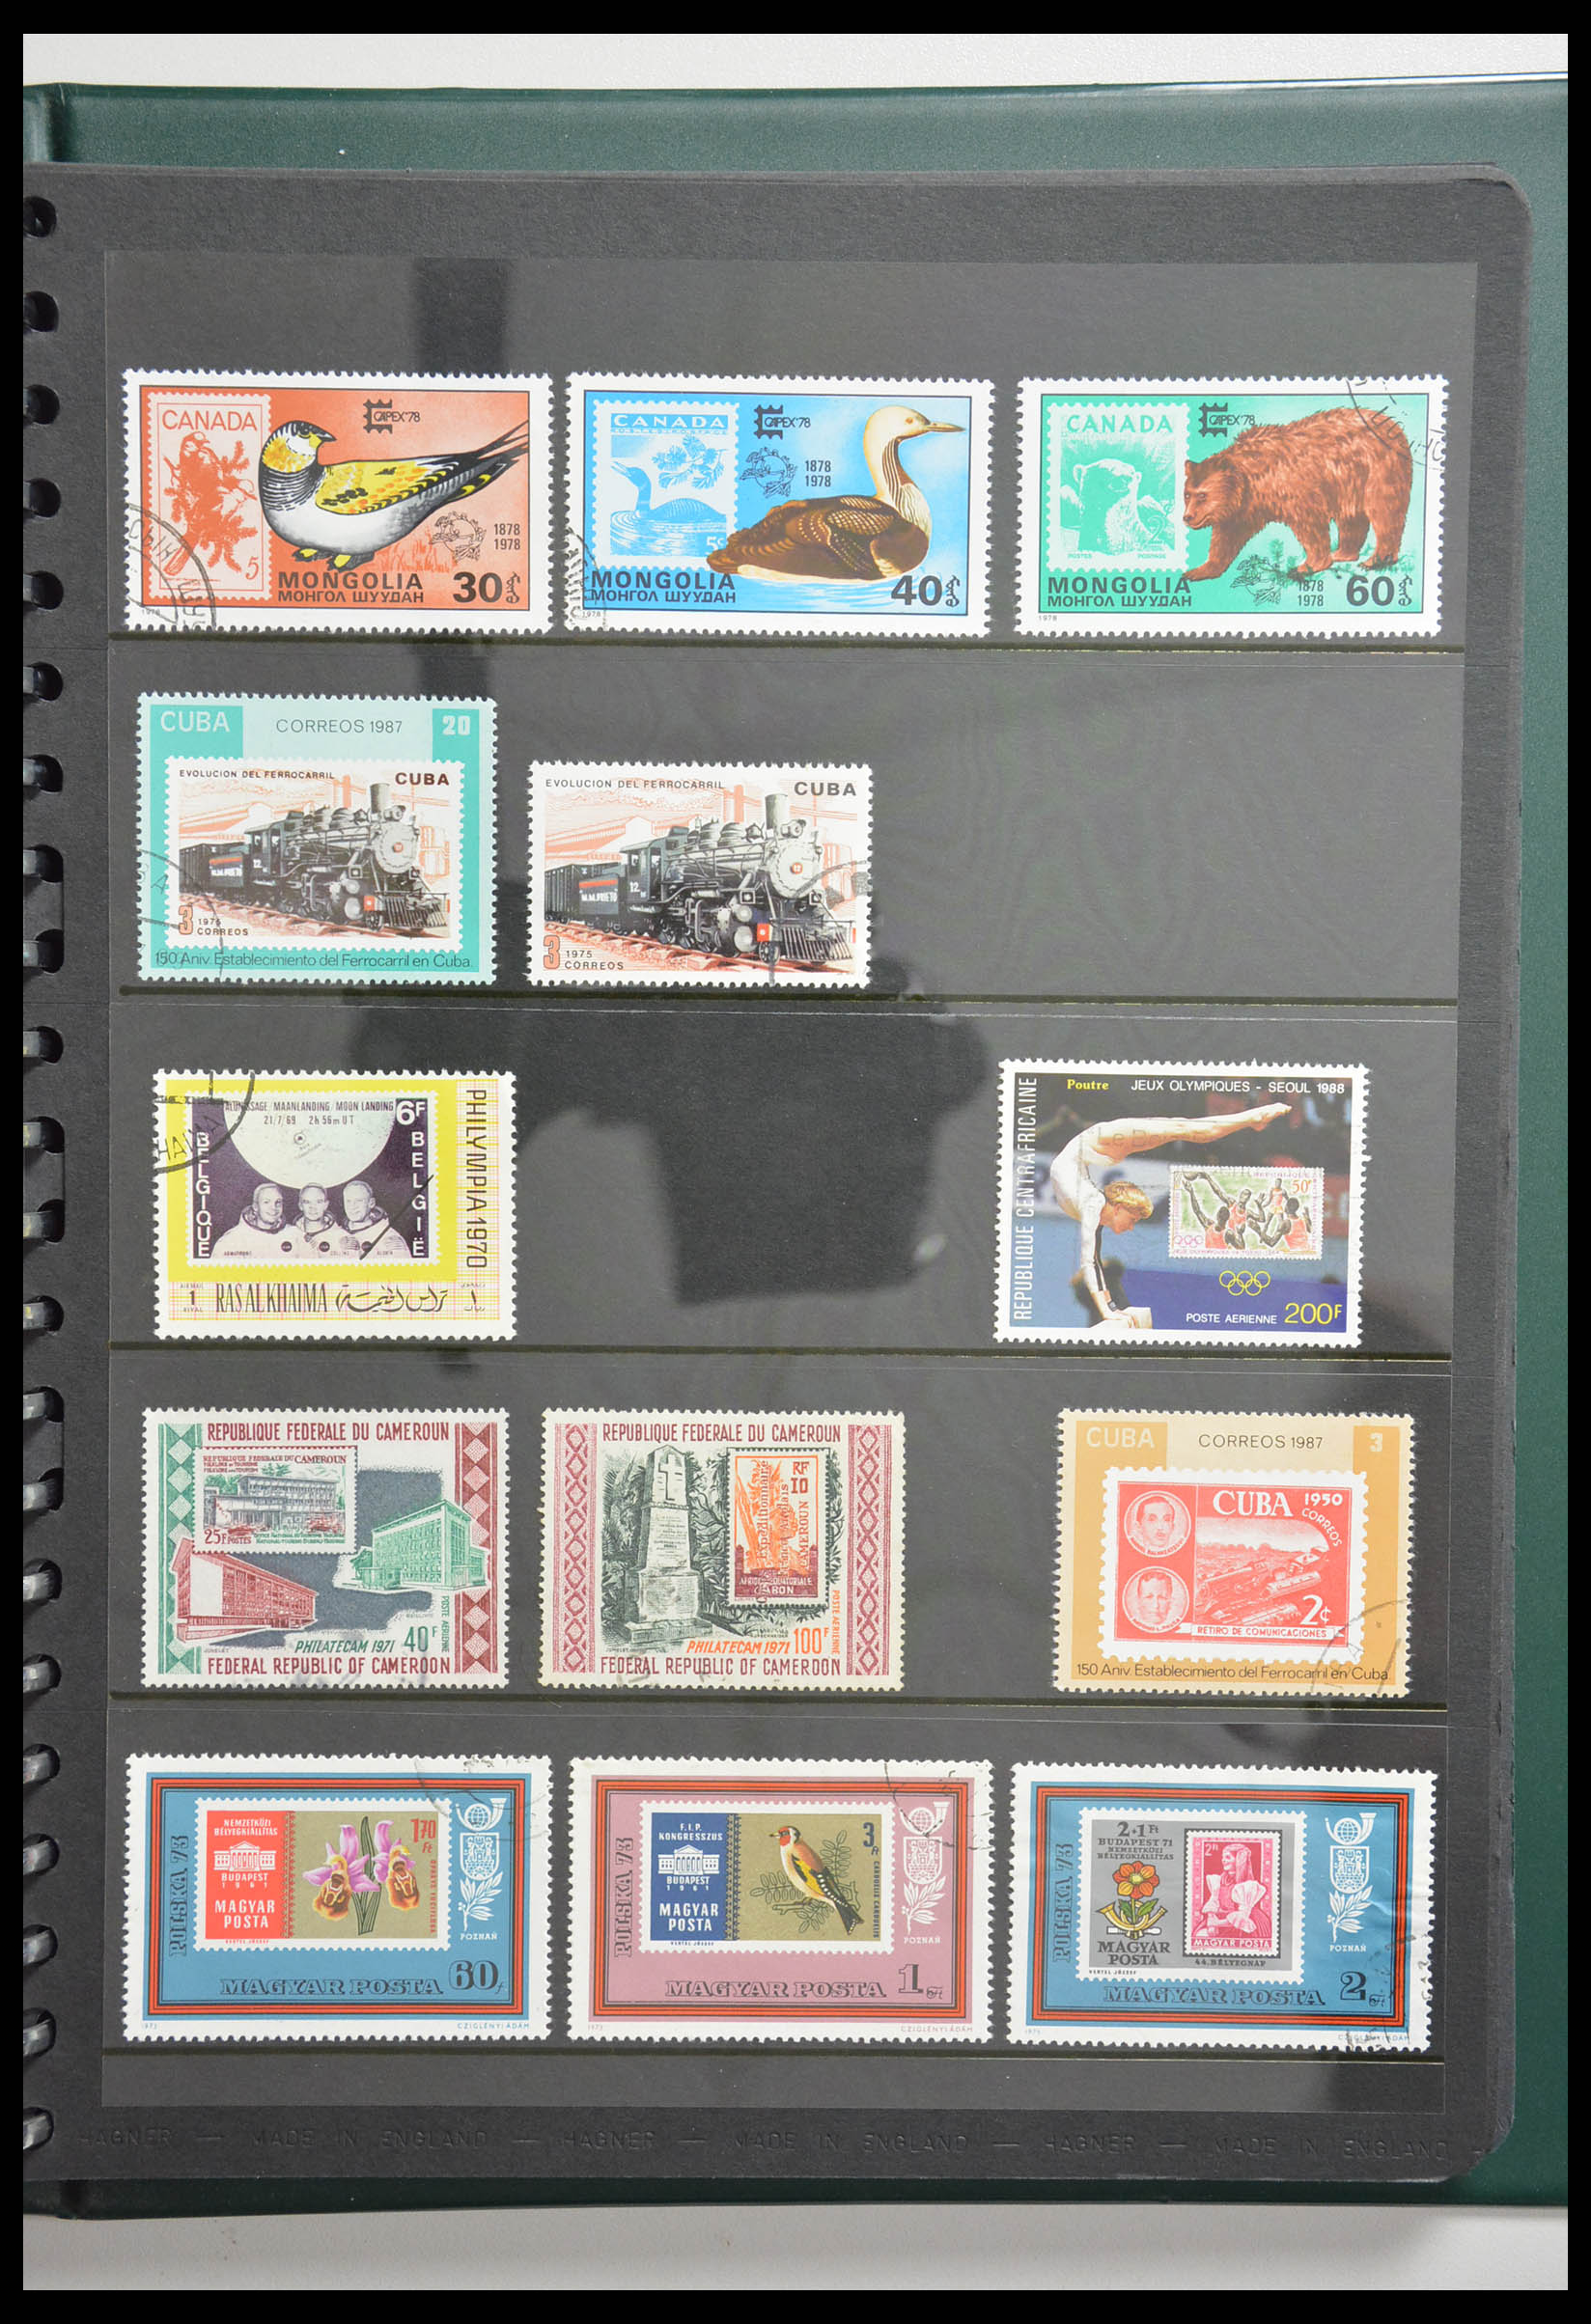 28337 029 - 28337 Postzegel op postzegel 1840-2001.